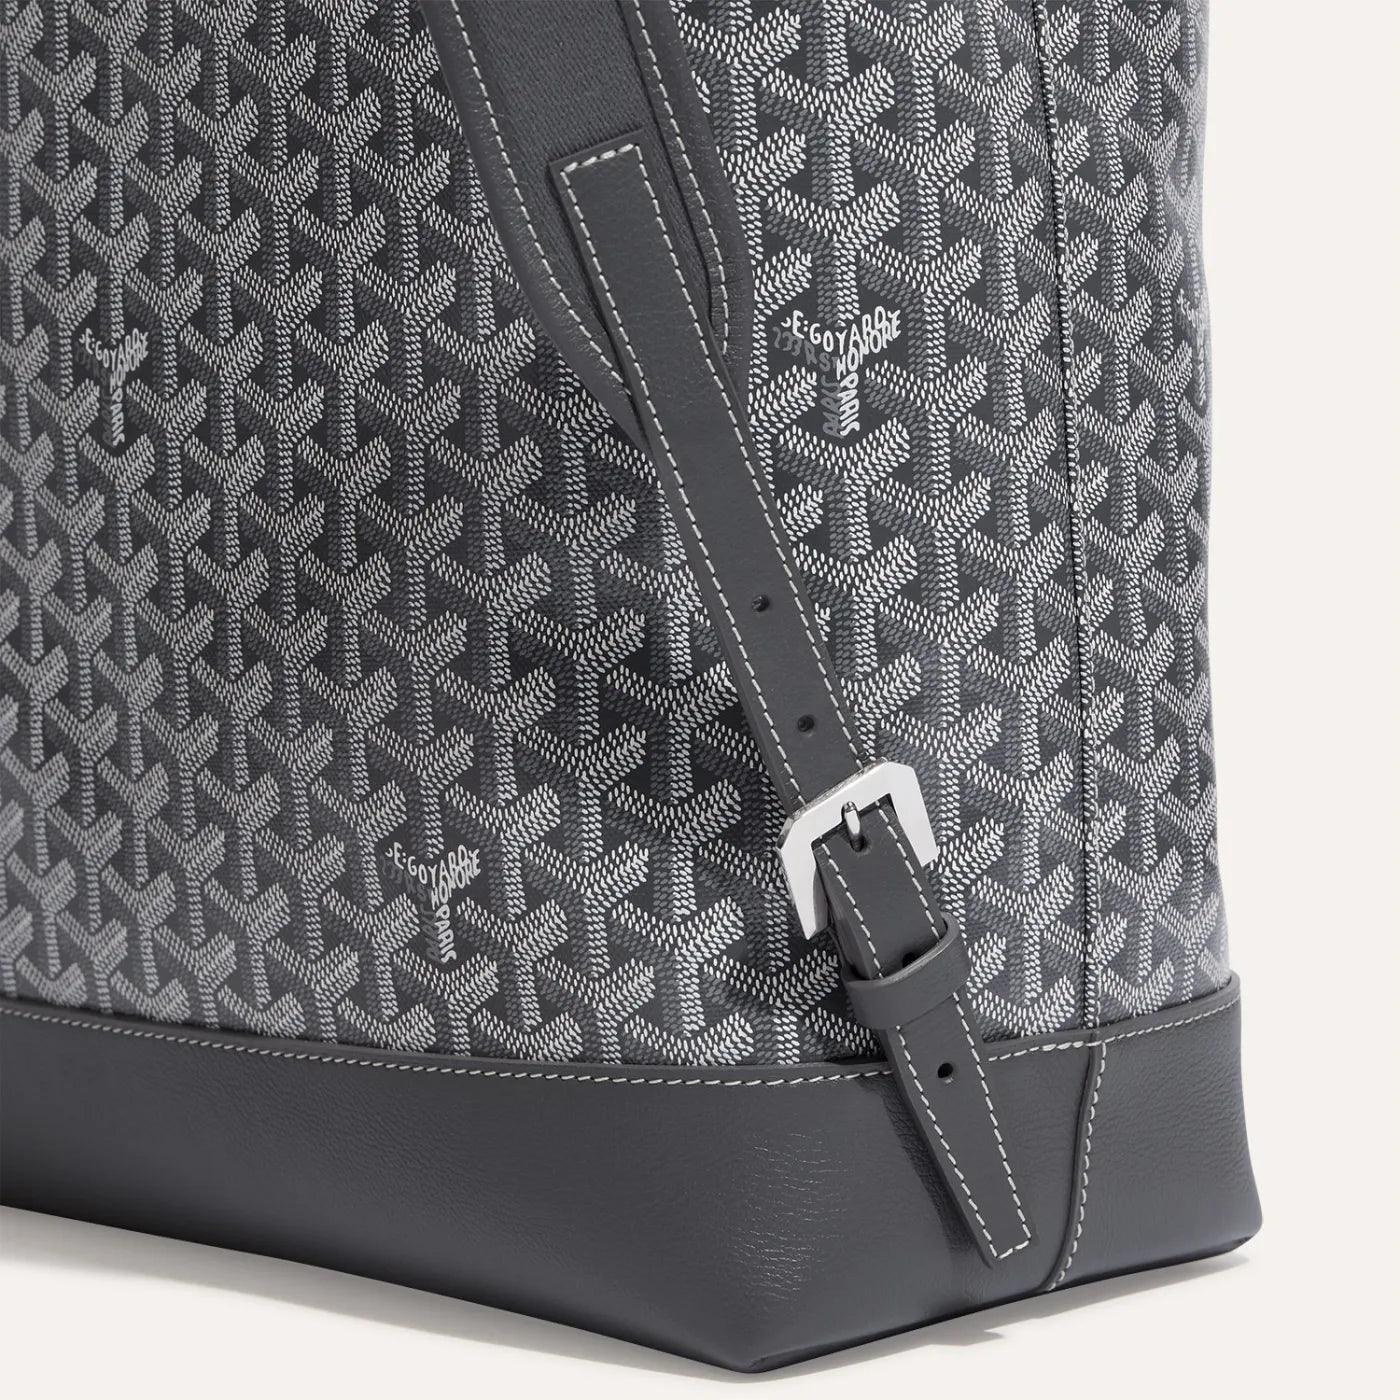 Goyard Cisalpin Backpack “Grey”